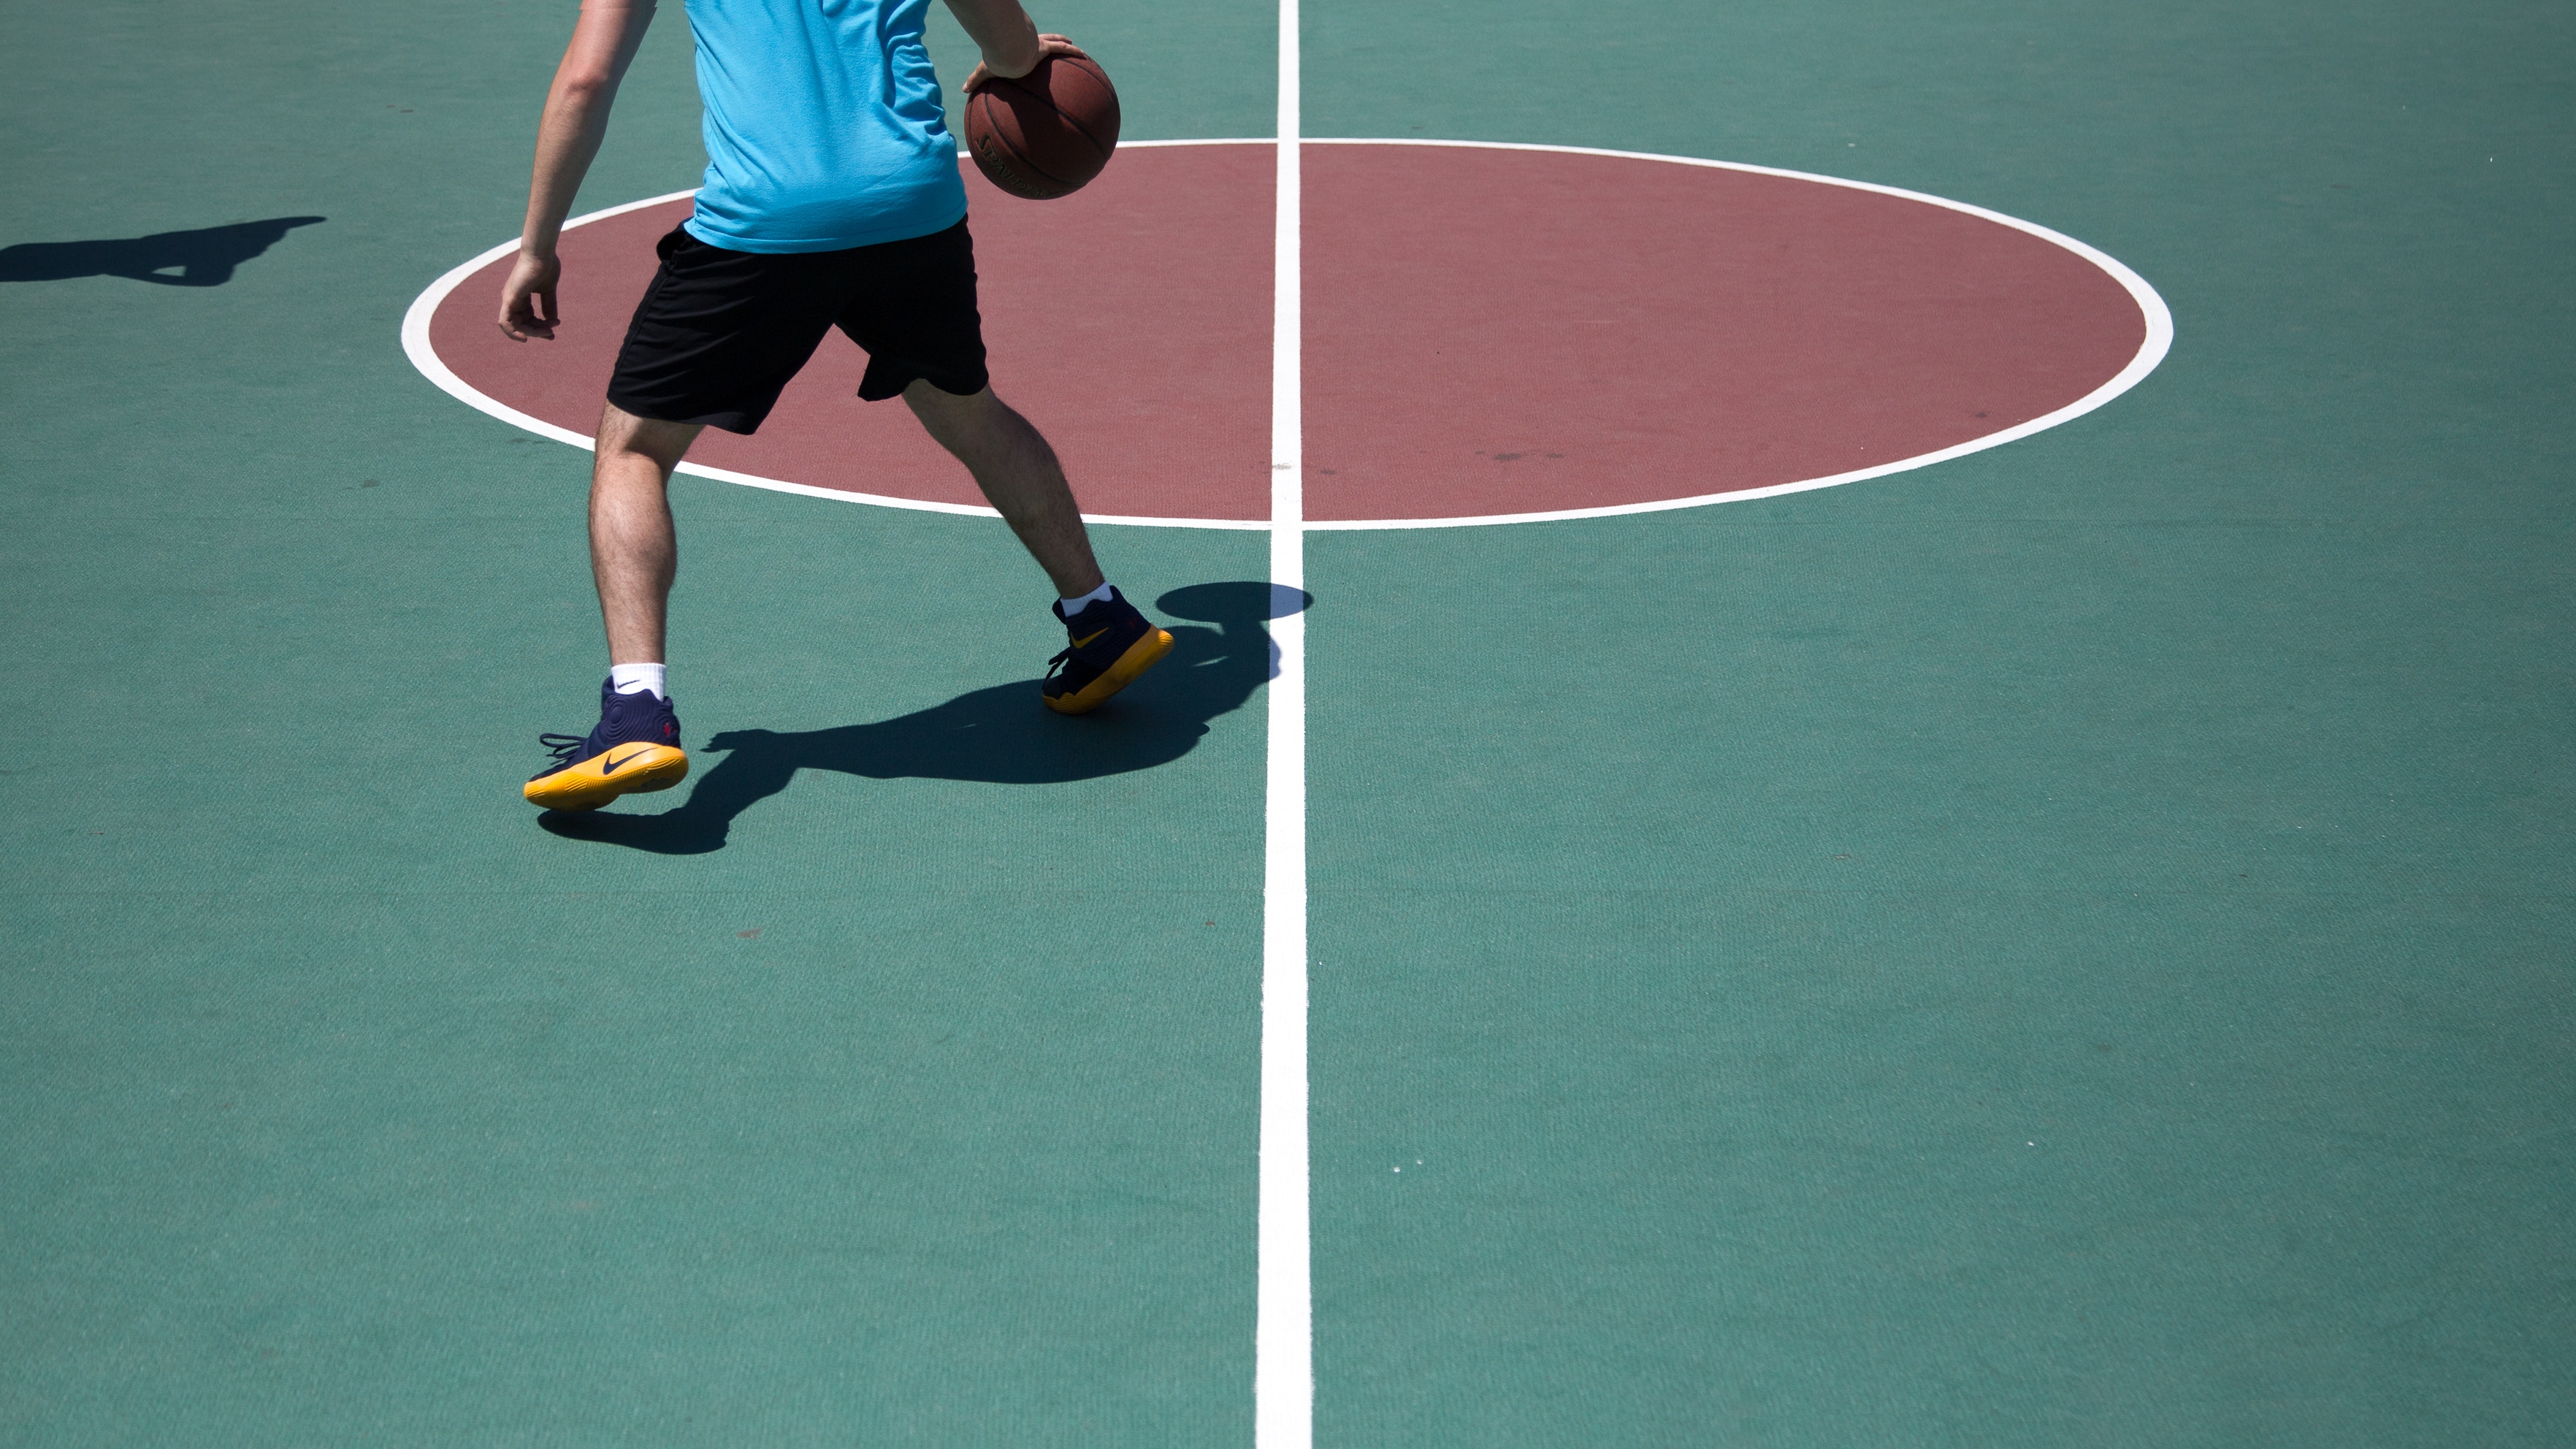 basketball player active on court. Basketball players may experience tendinopathy